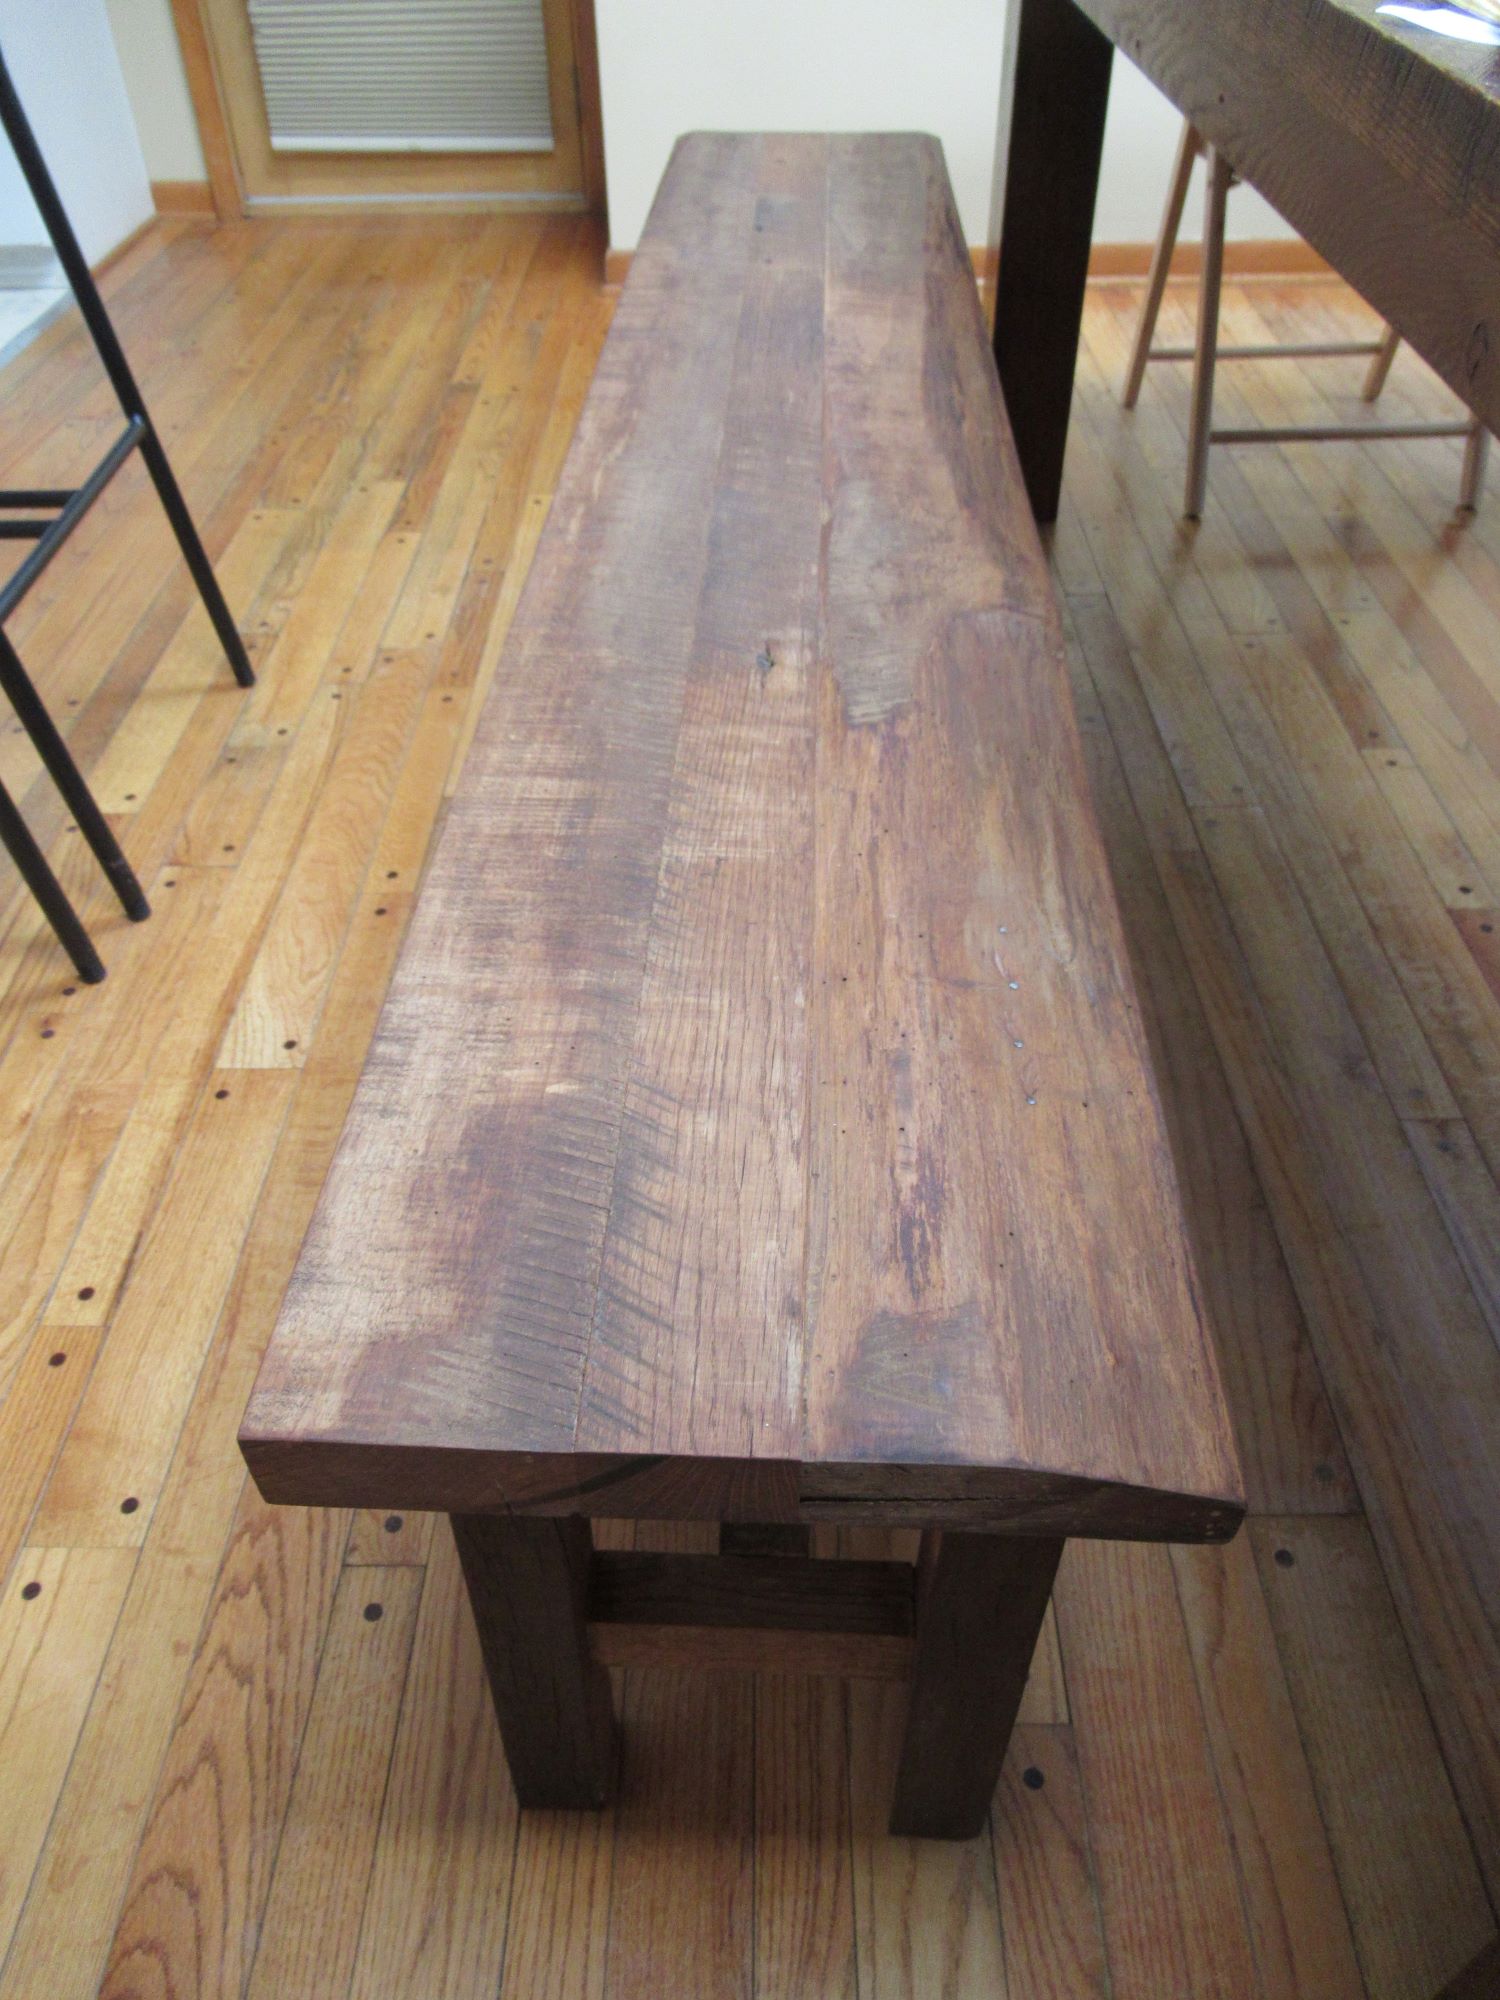 Handcrafted barnwood bench to accompany a custom viking table